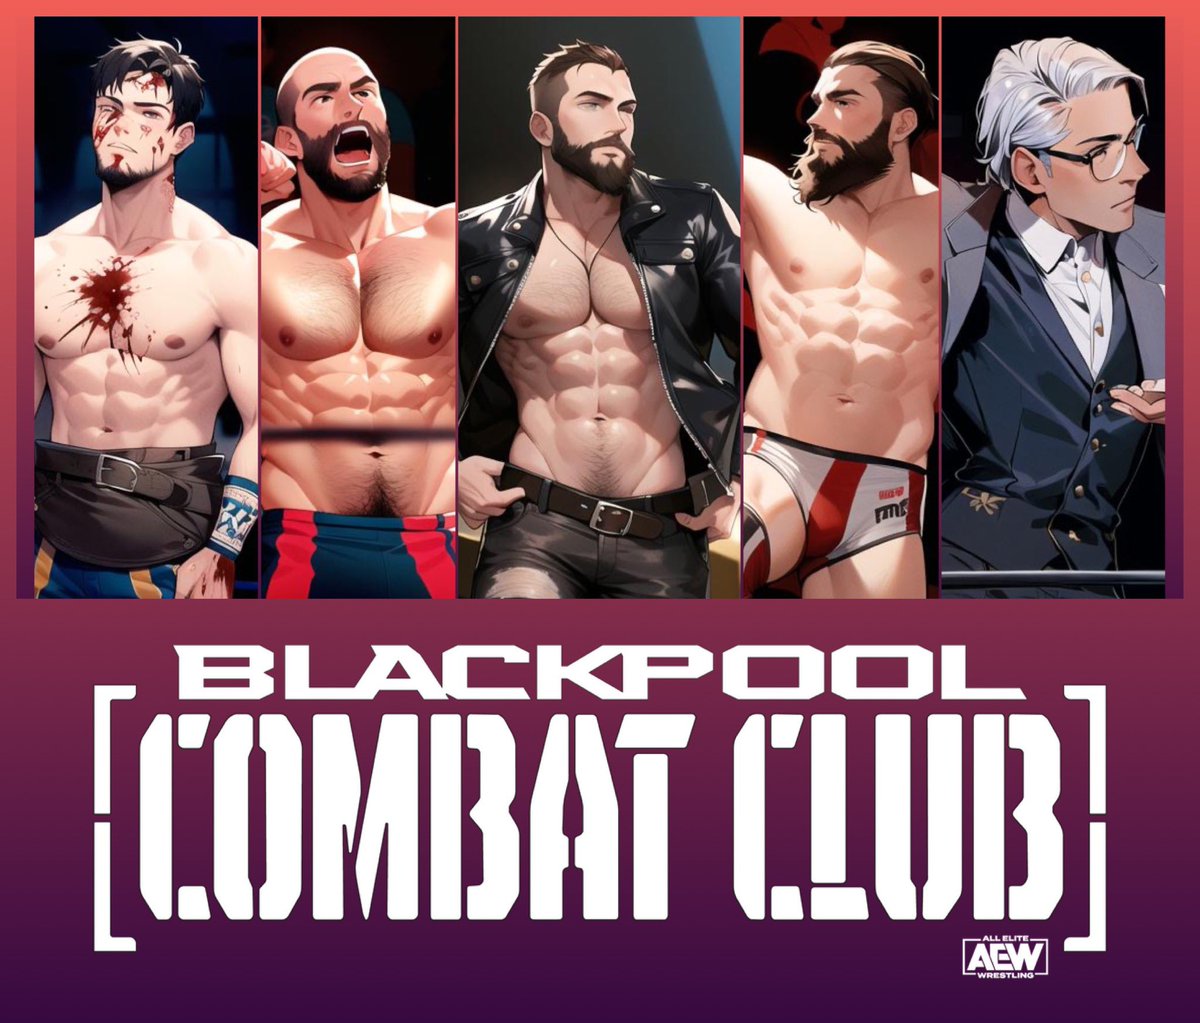 Blackpool Combat Club 

#Anime 
#AEW 
#ROH 
#JonMoxley
#BryanDanielson
#ClaudioCastagnoli
#WheelerYuta 
#WilliamRegal